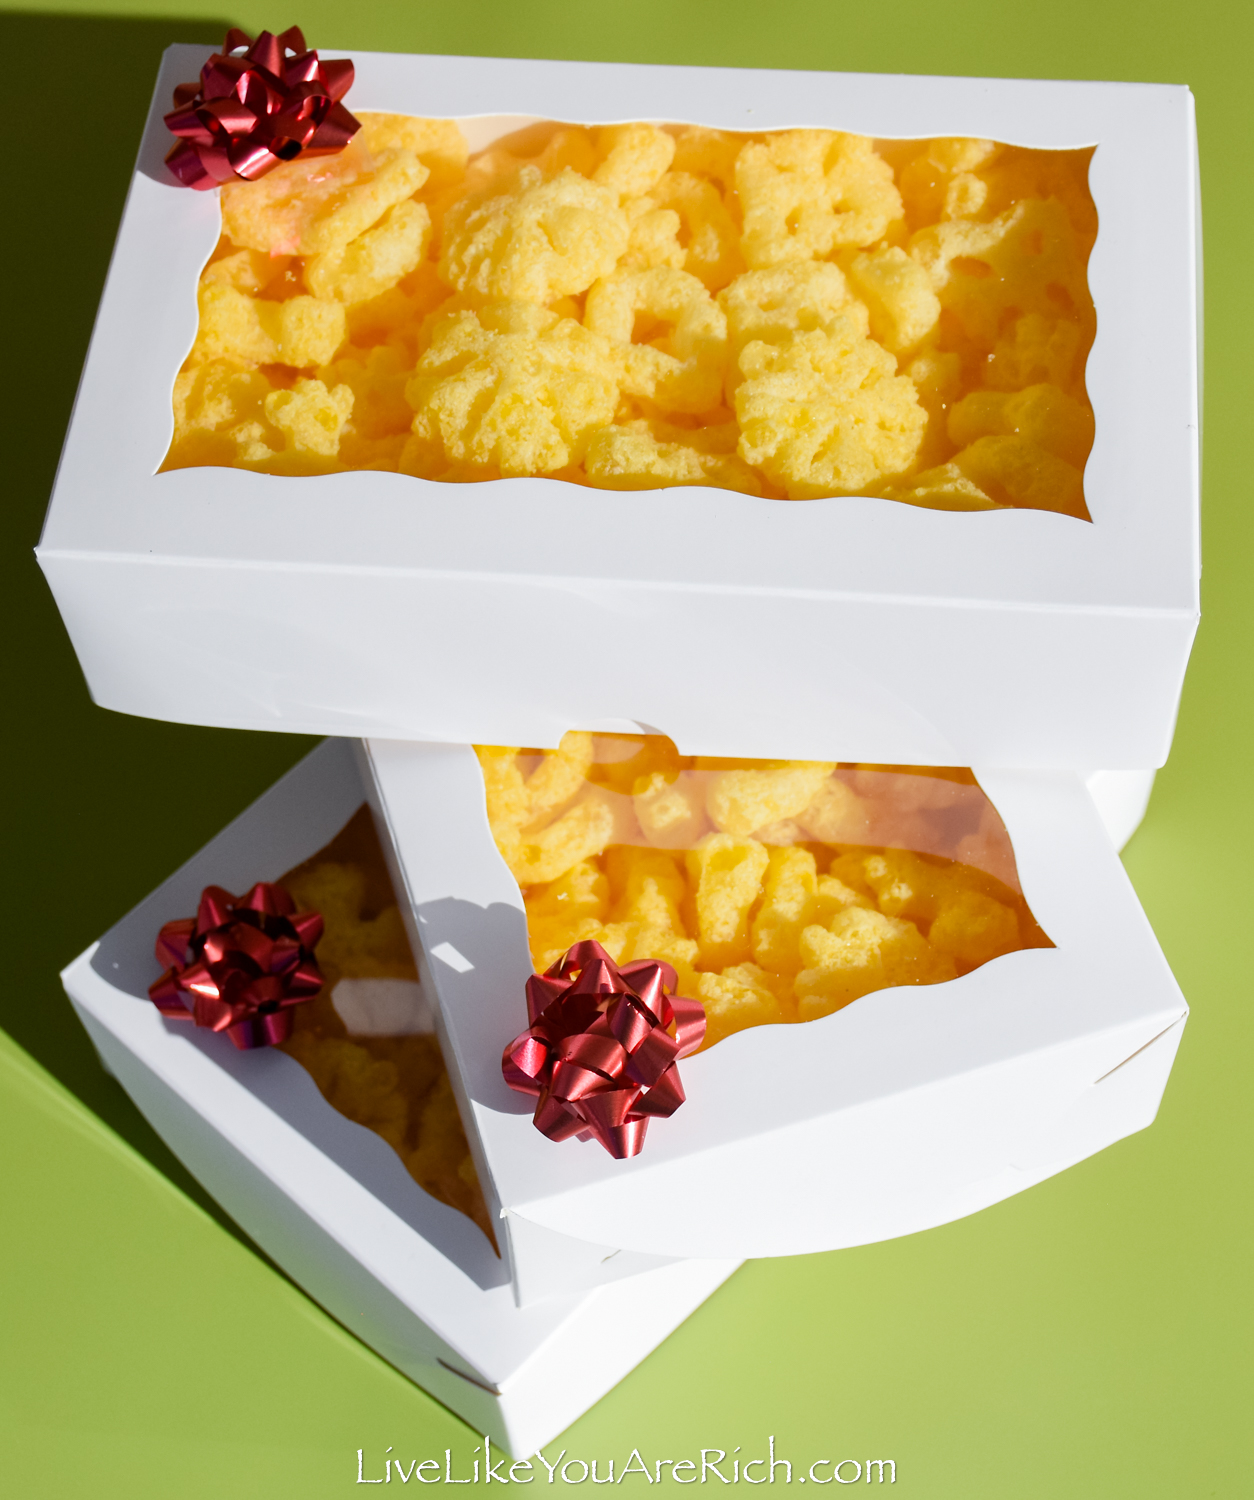 Neighbor Christmas Gift: Cheetos Snowflakes